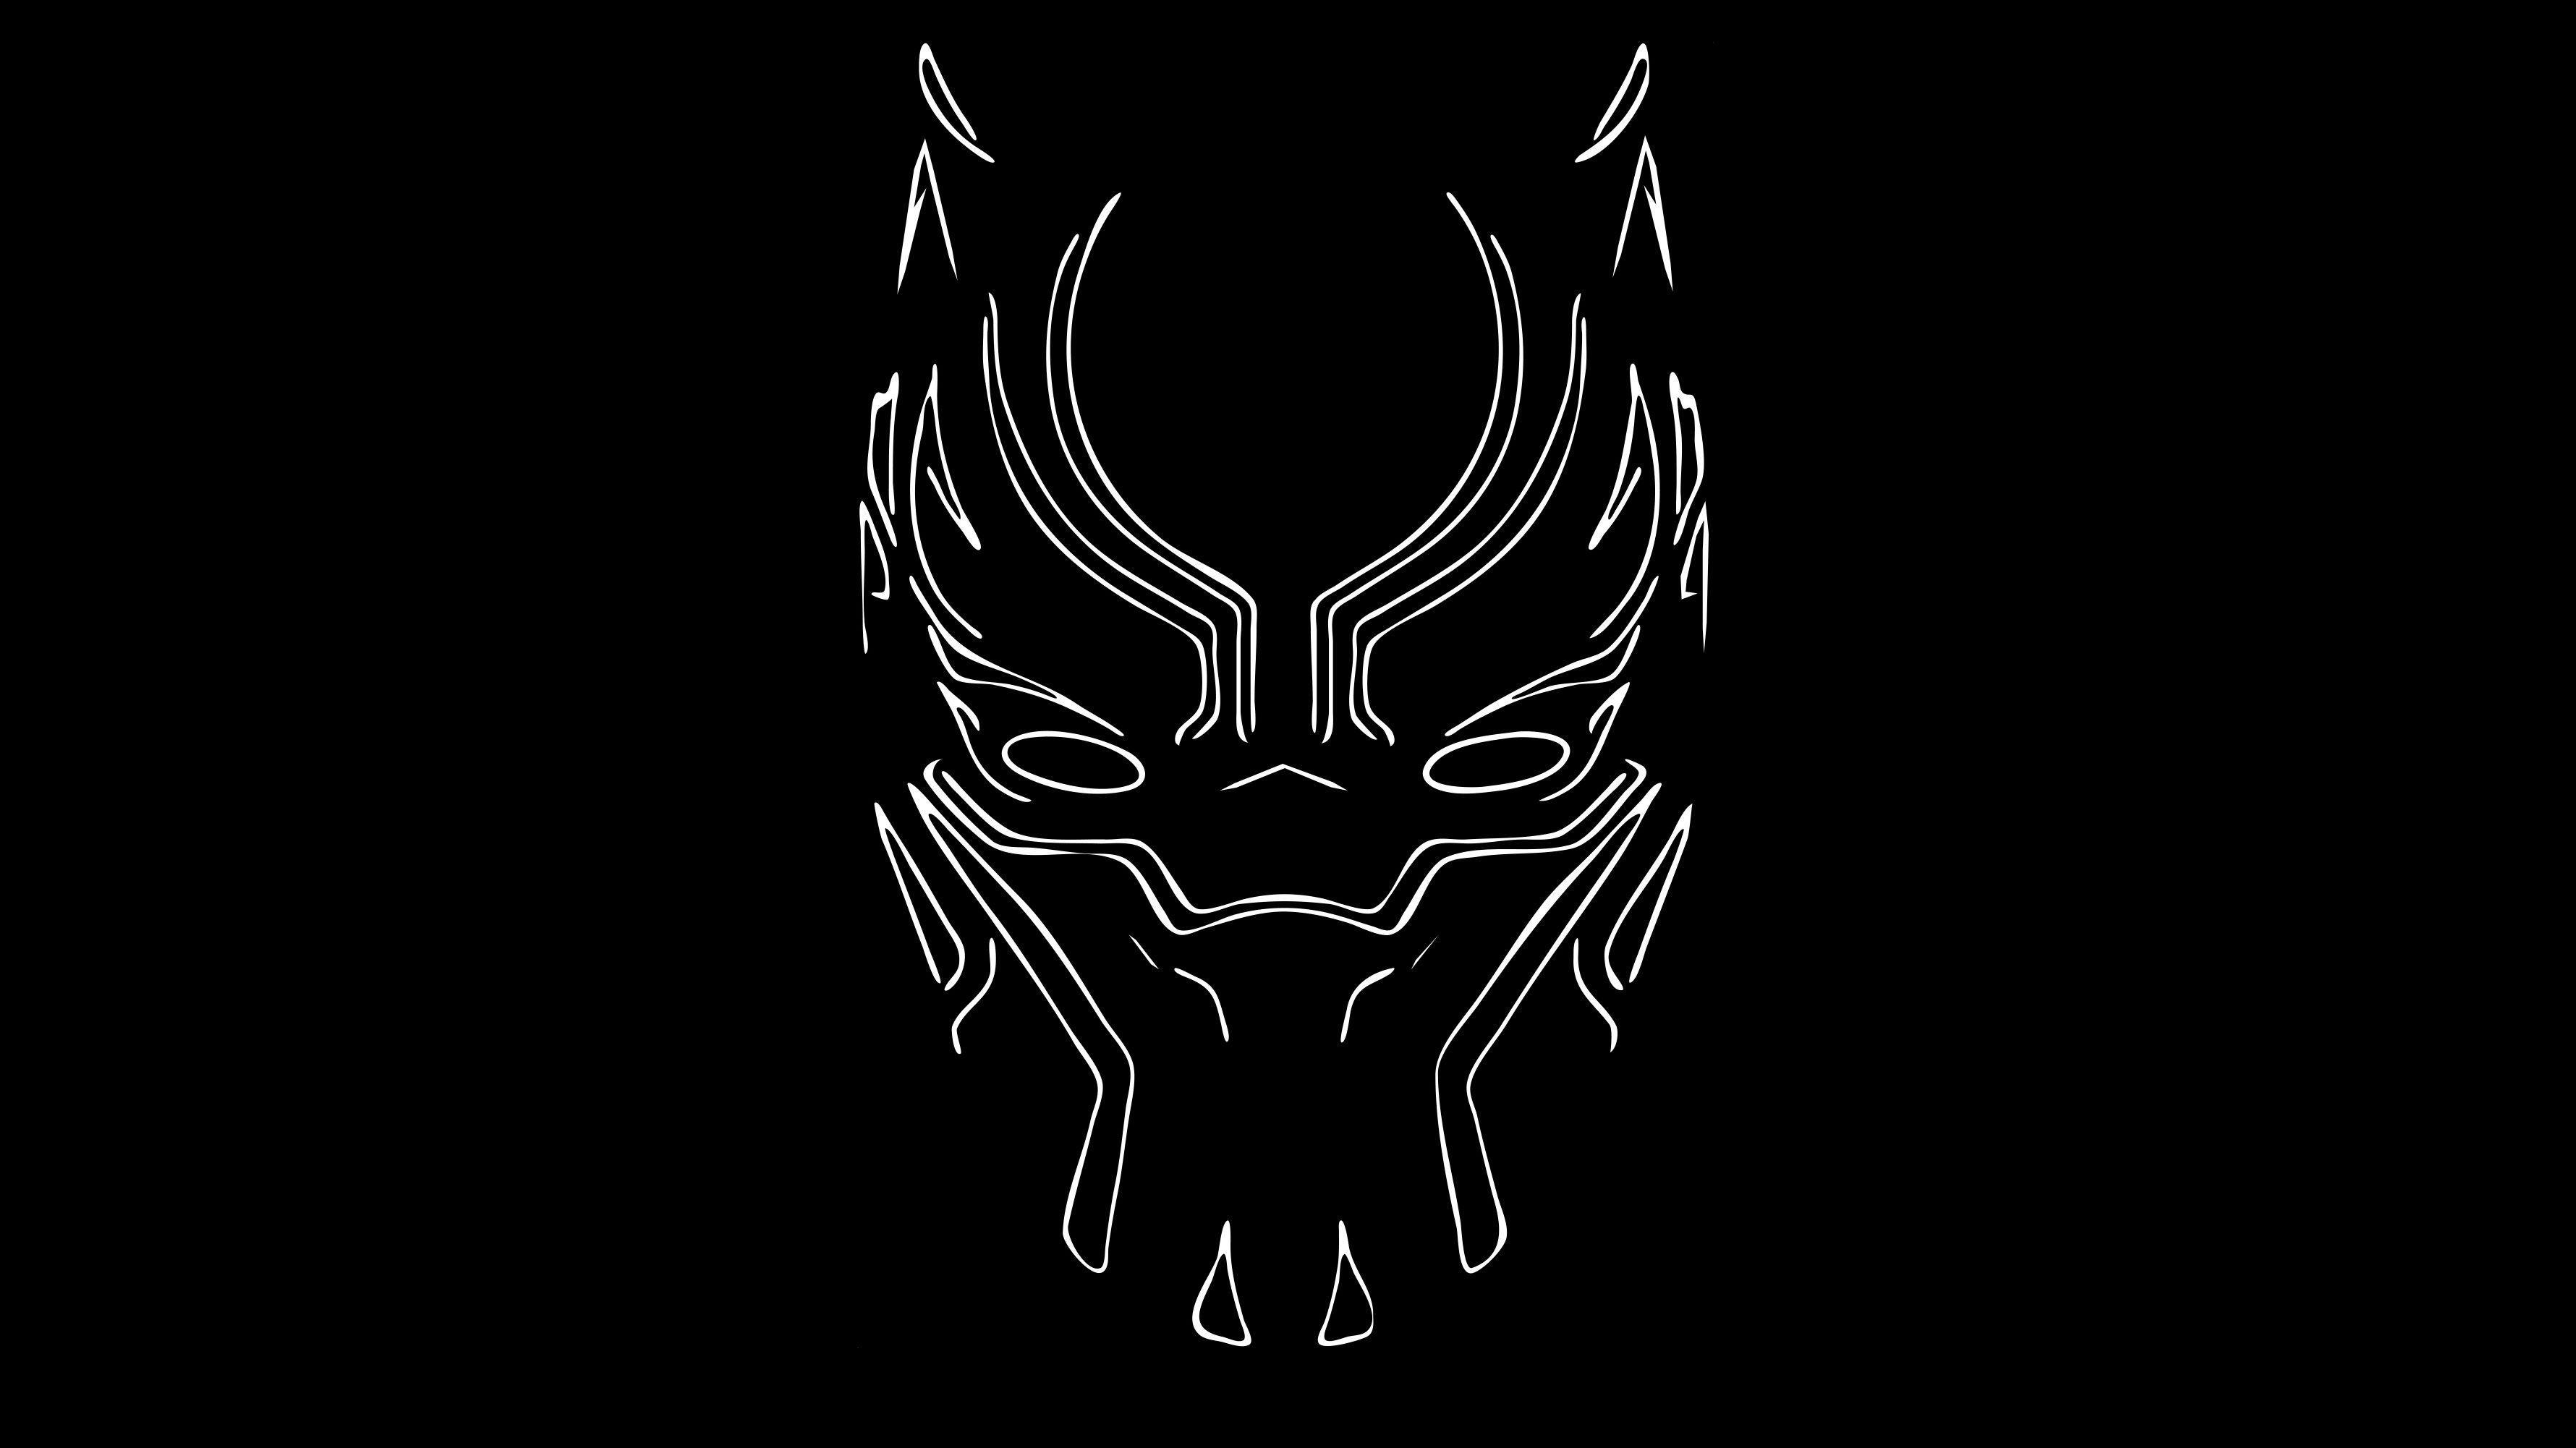 3561 x 2002 · jpeg - Black Panther Logo Wallpapers - Wallpaper Cave